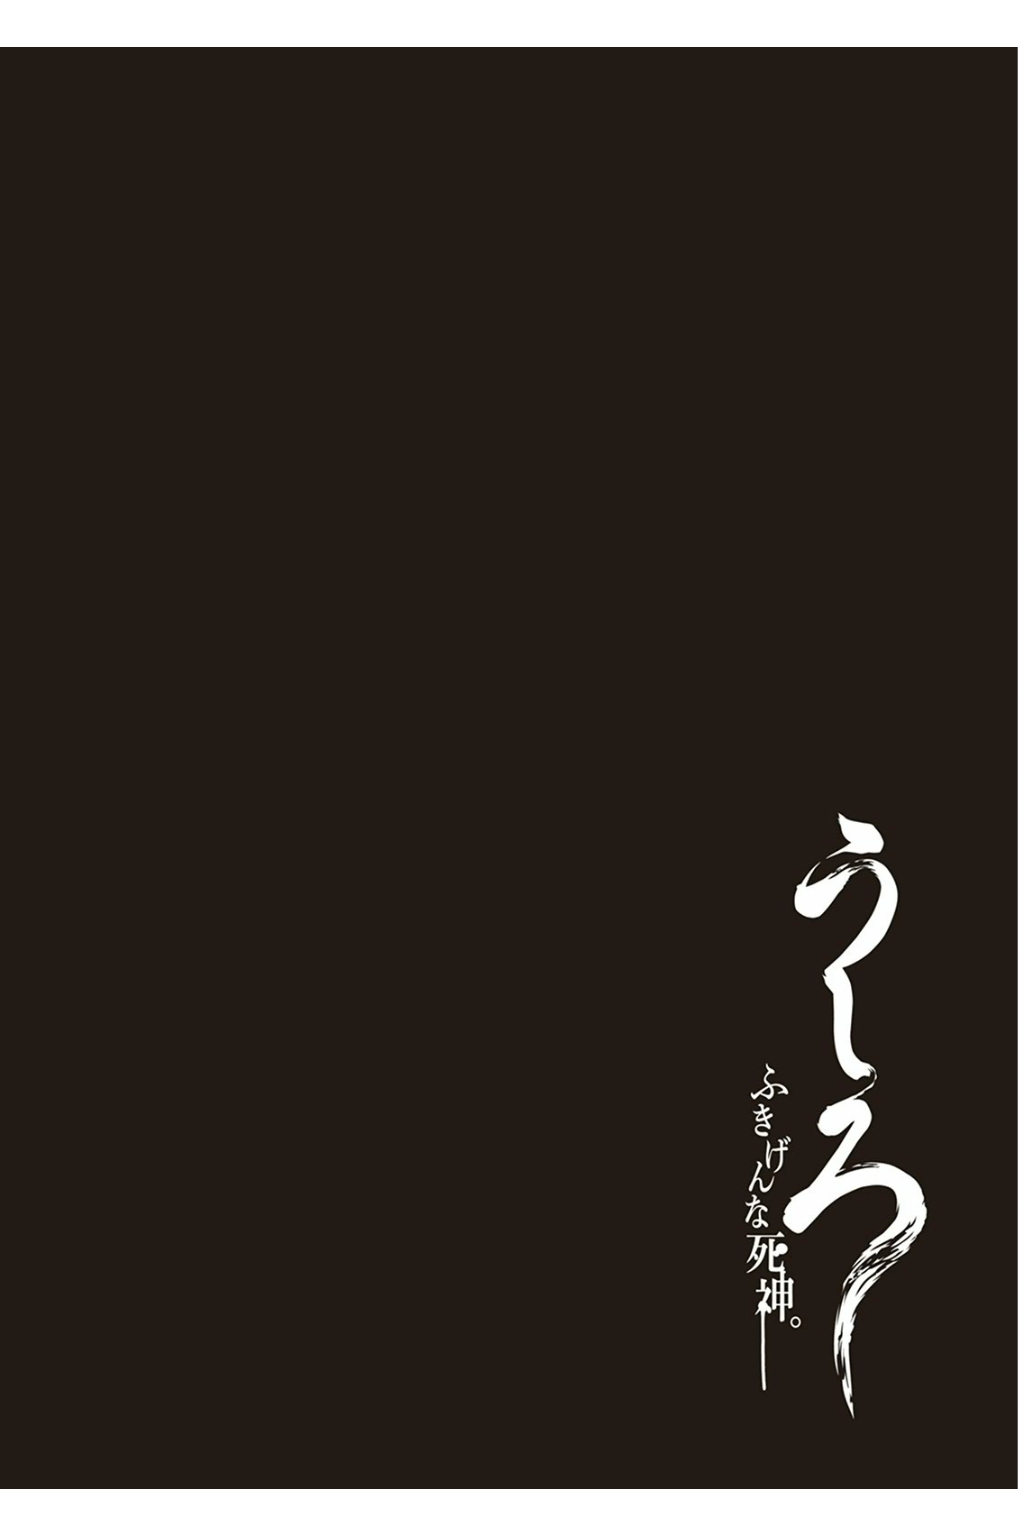 Ushiro The Somber God of Death Vol. 1 Ch. 2